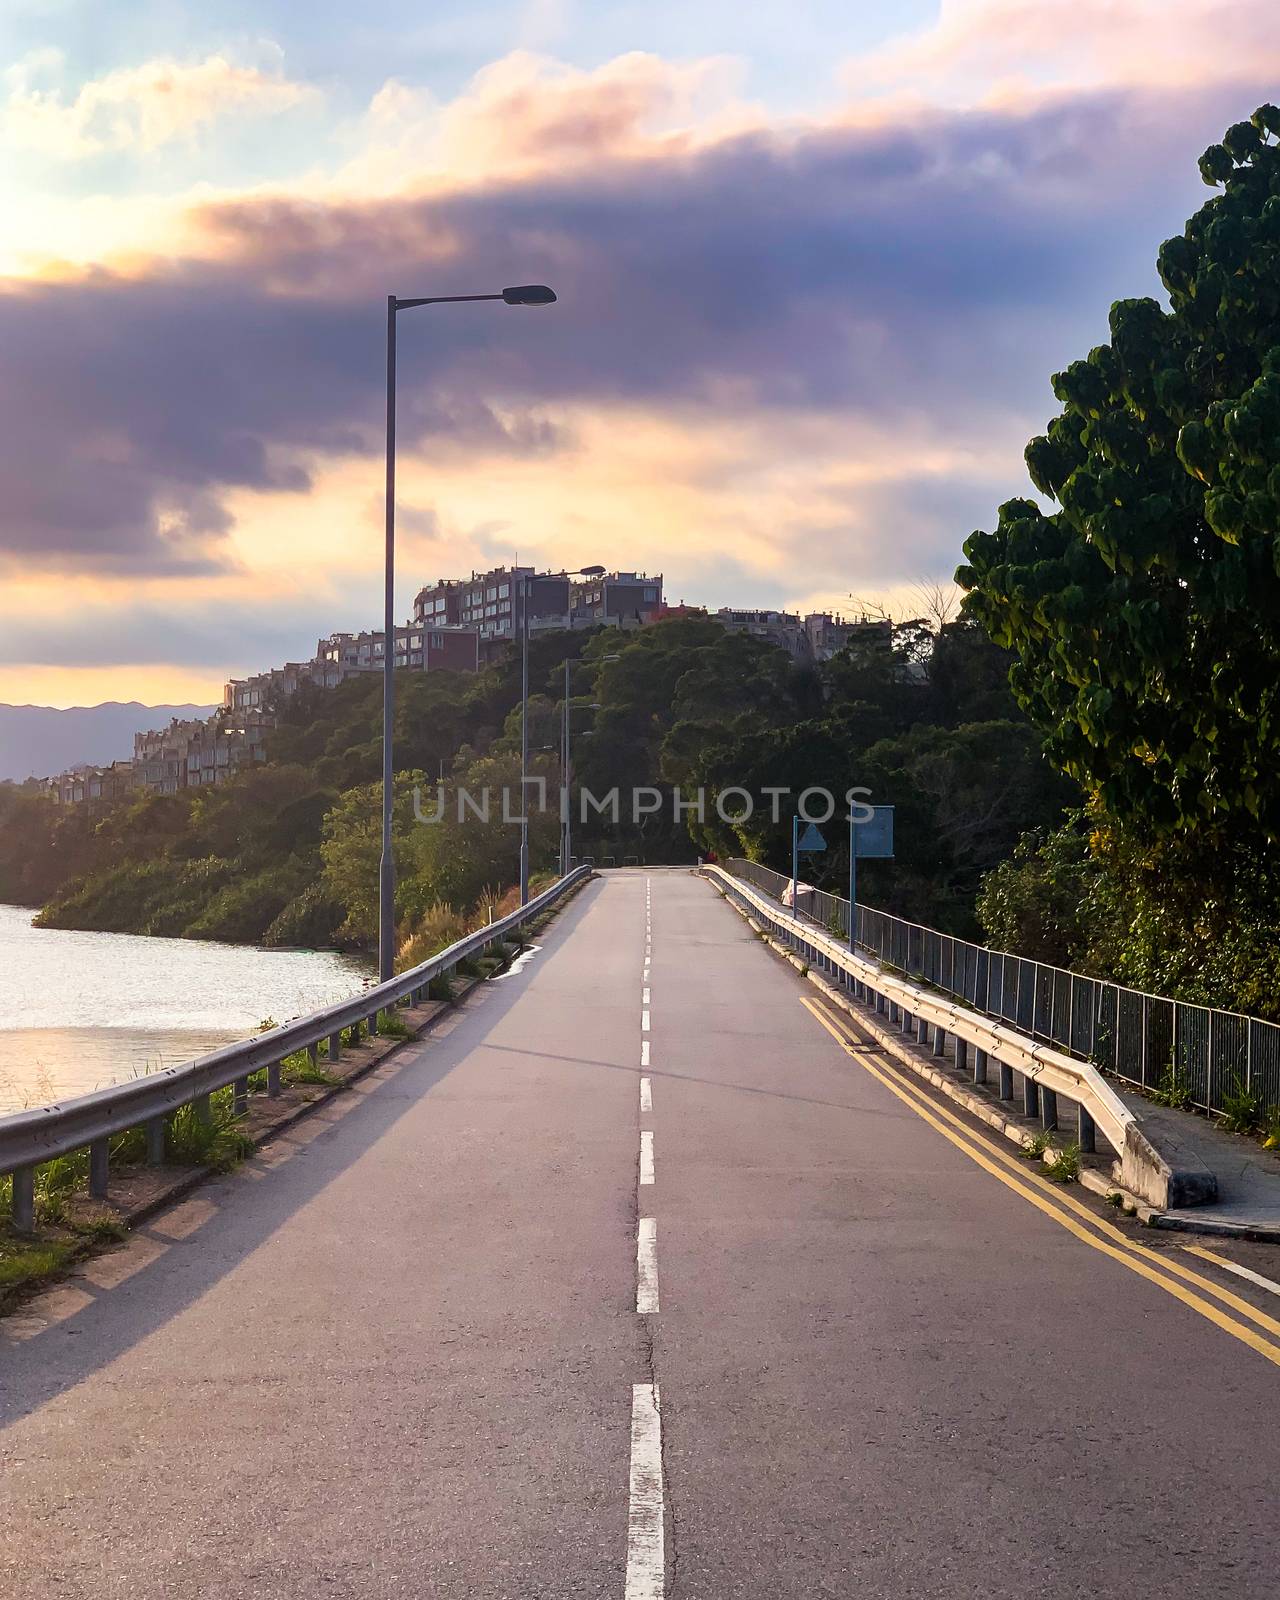 The vertical car road near ocean in Hong Kong residential district